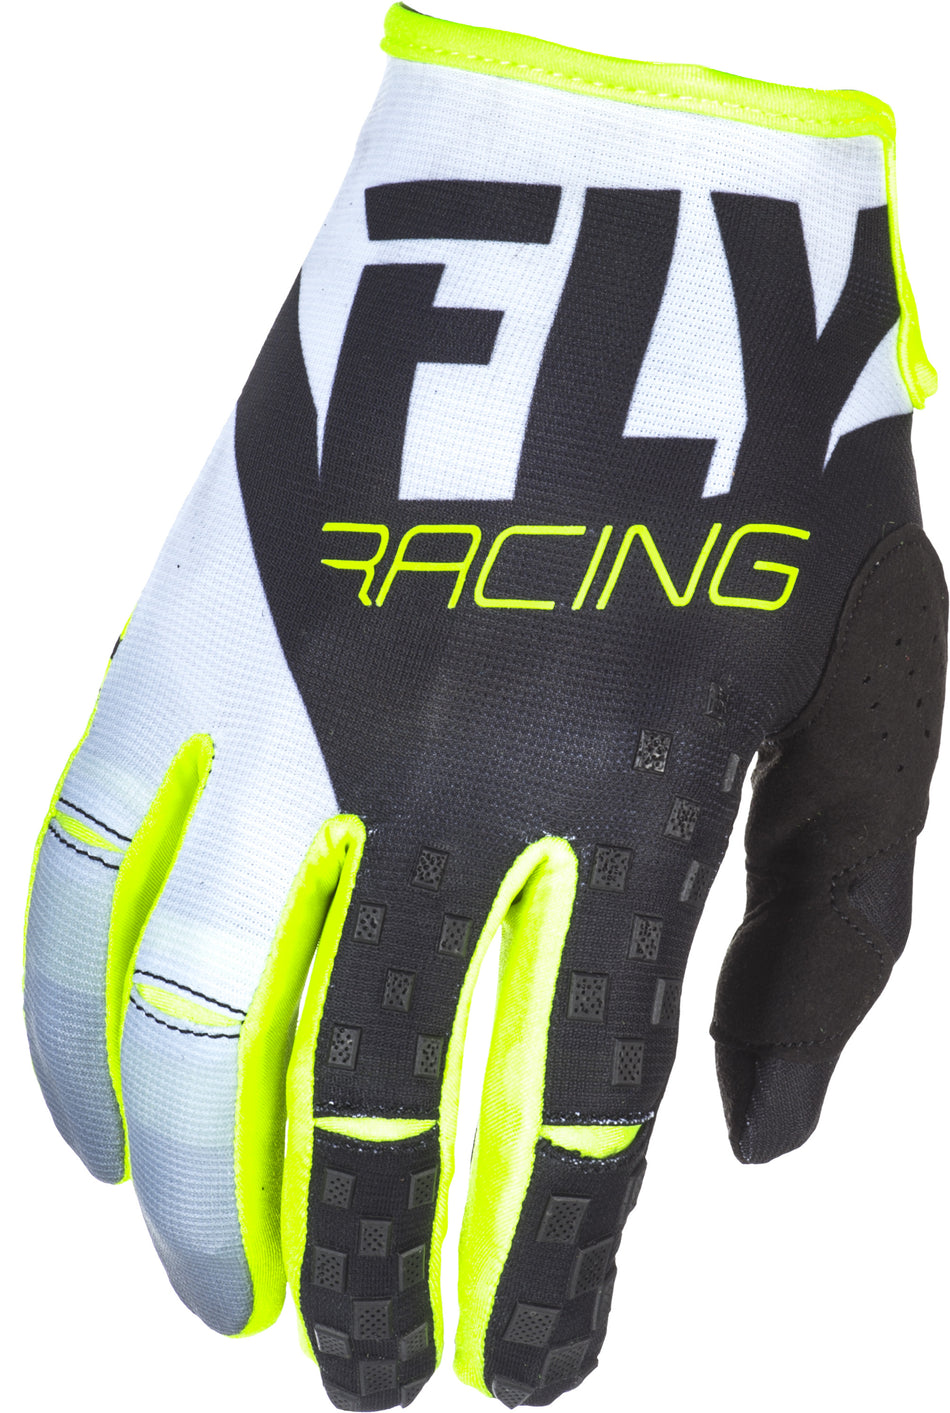 FLY RACING Kinetic Gloves Black/White/Hi-Vis Sz 5 371-41605